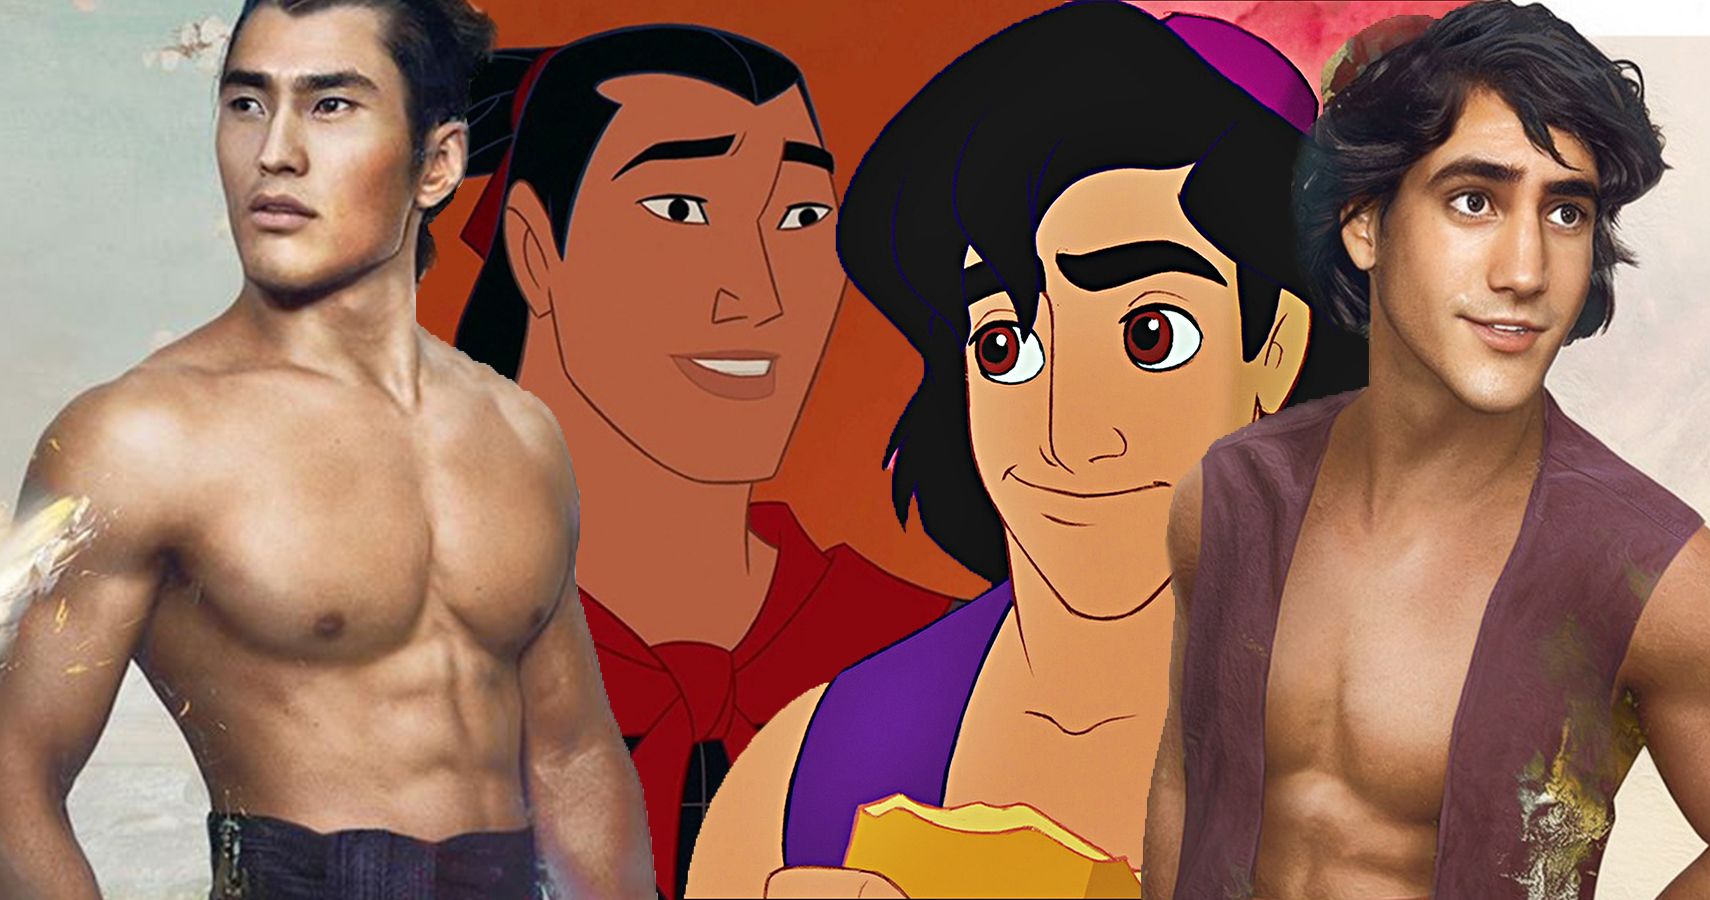 Top 10 Disney Princes’ Reimagined As RealLife Character Art